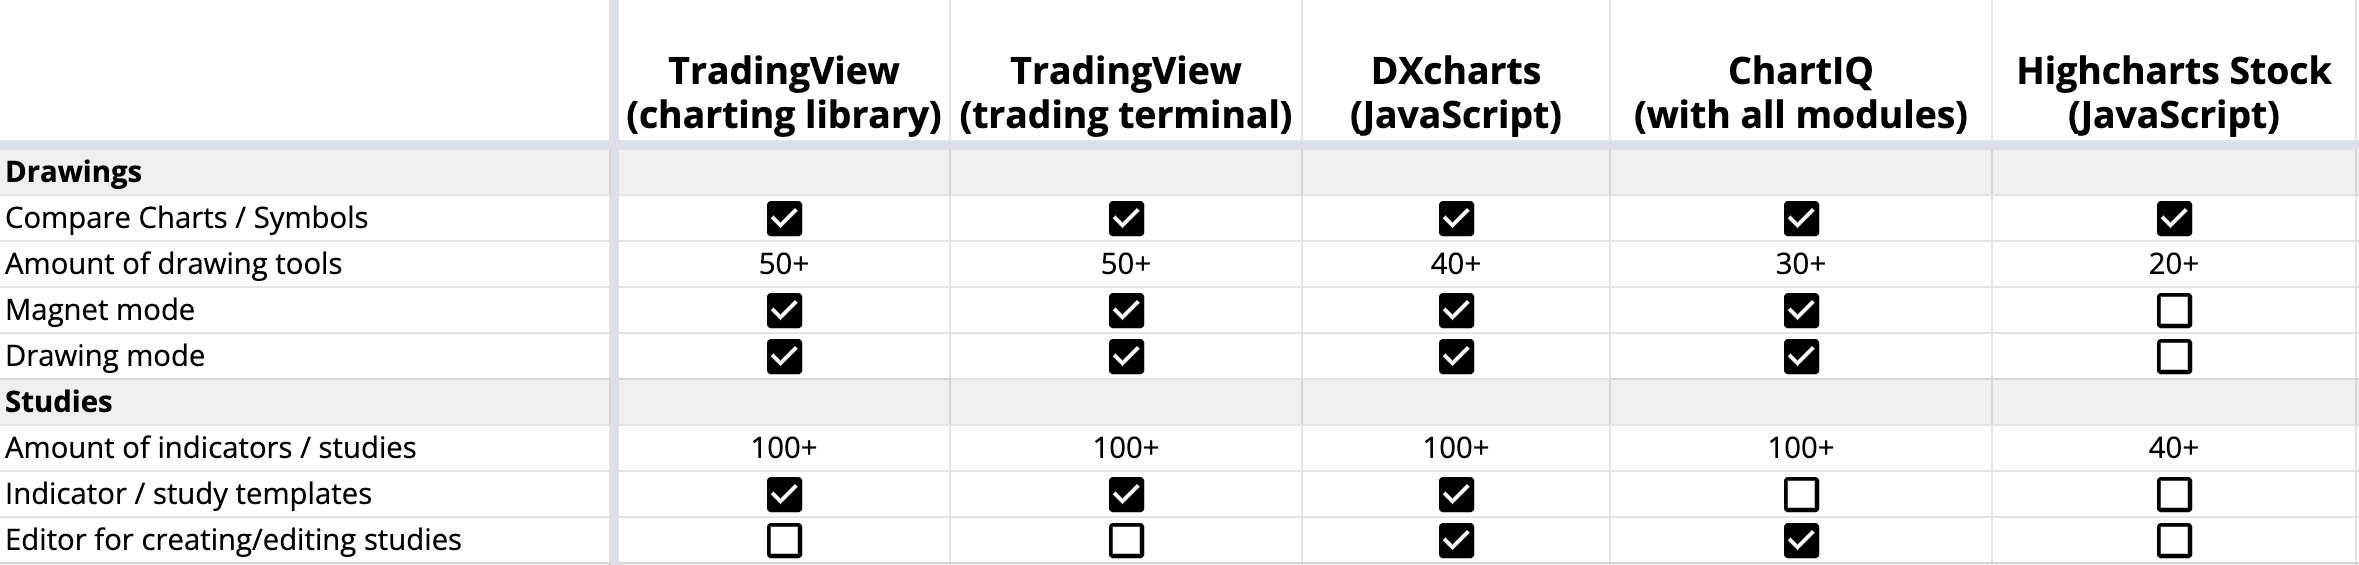 Рисунки и индикаторы в TradingView, DXcharts, ChartIQ и Highcharts